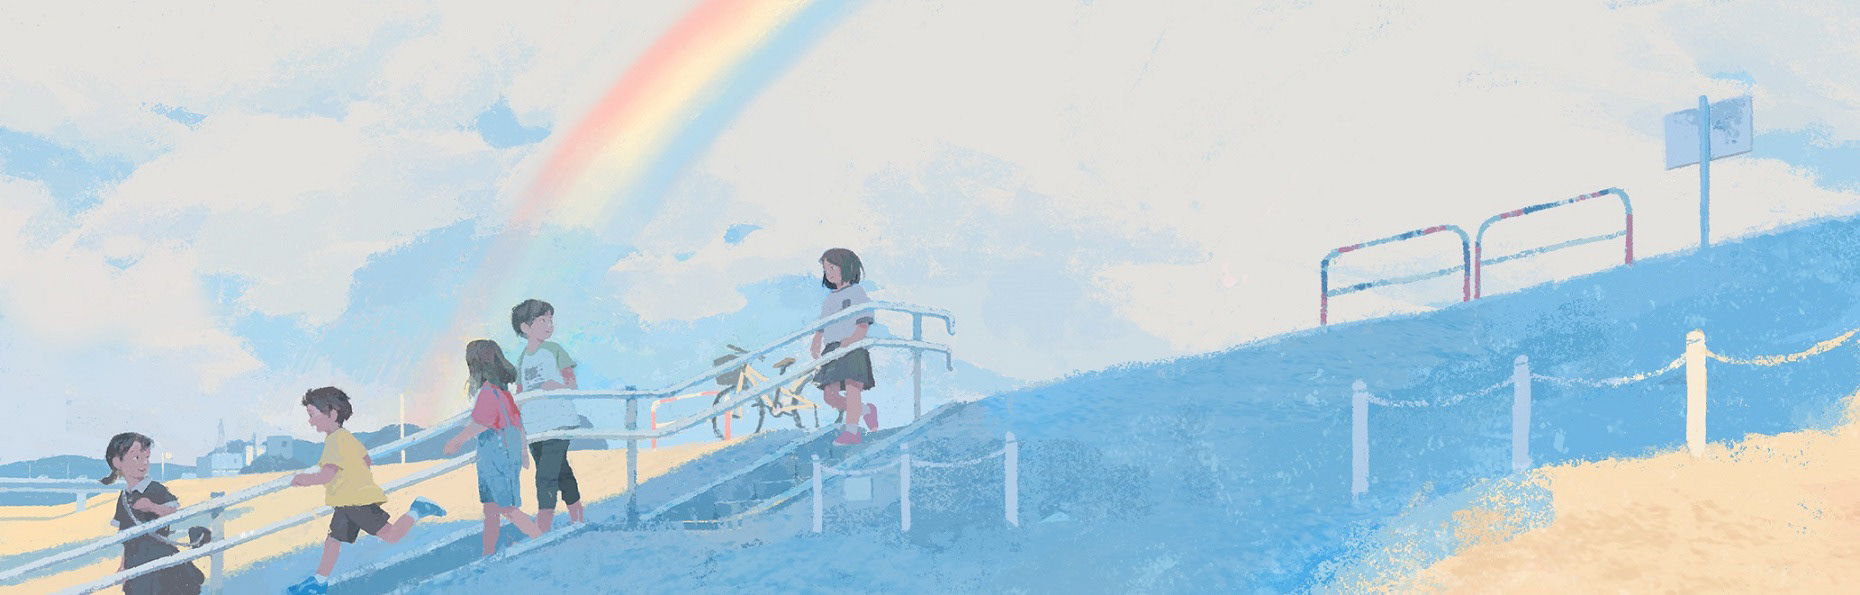 Shirako Illustration かがやけ 虹の架け橋